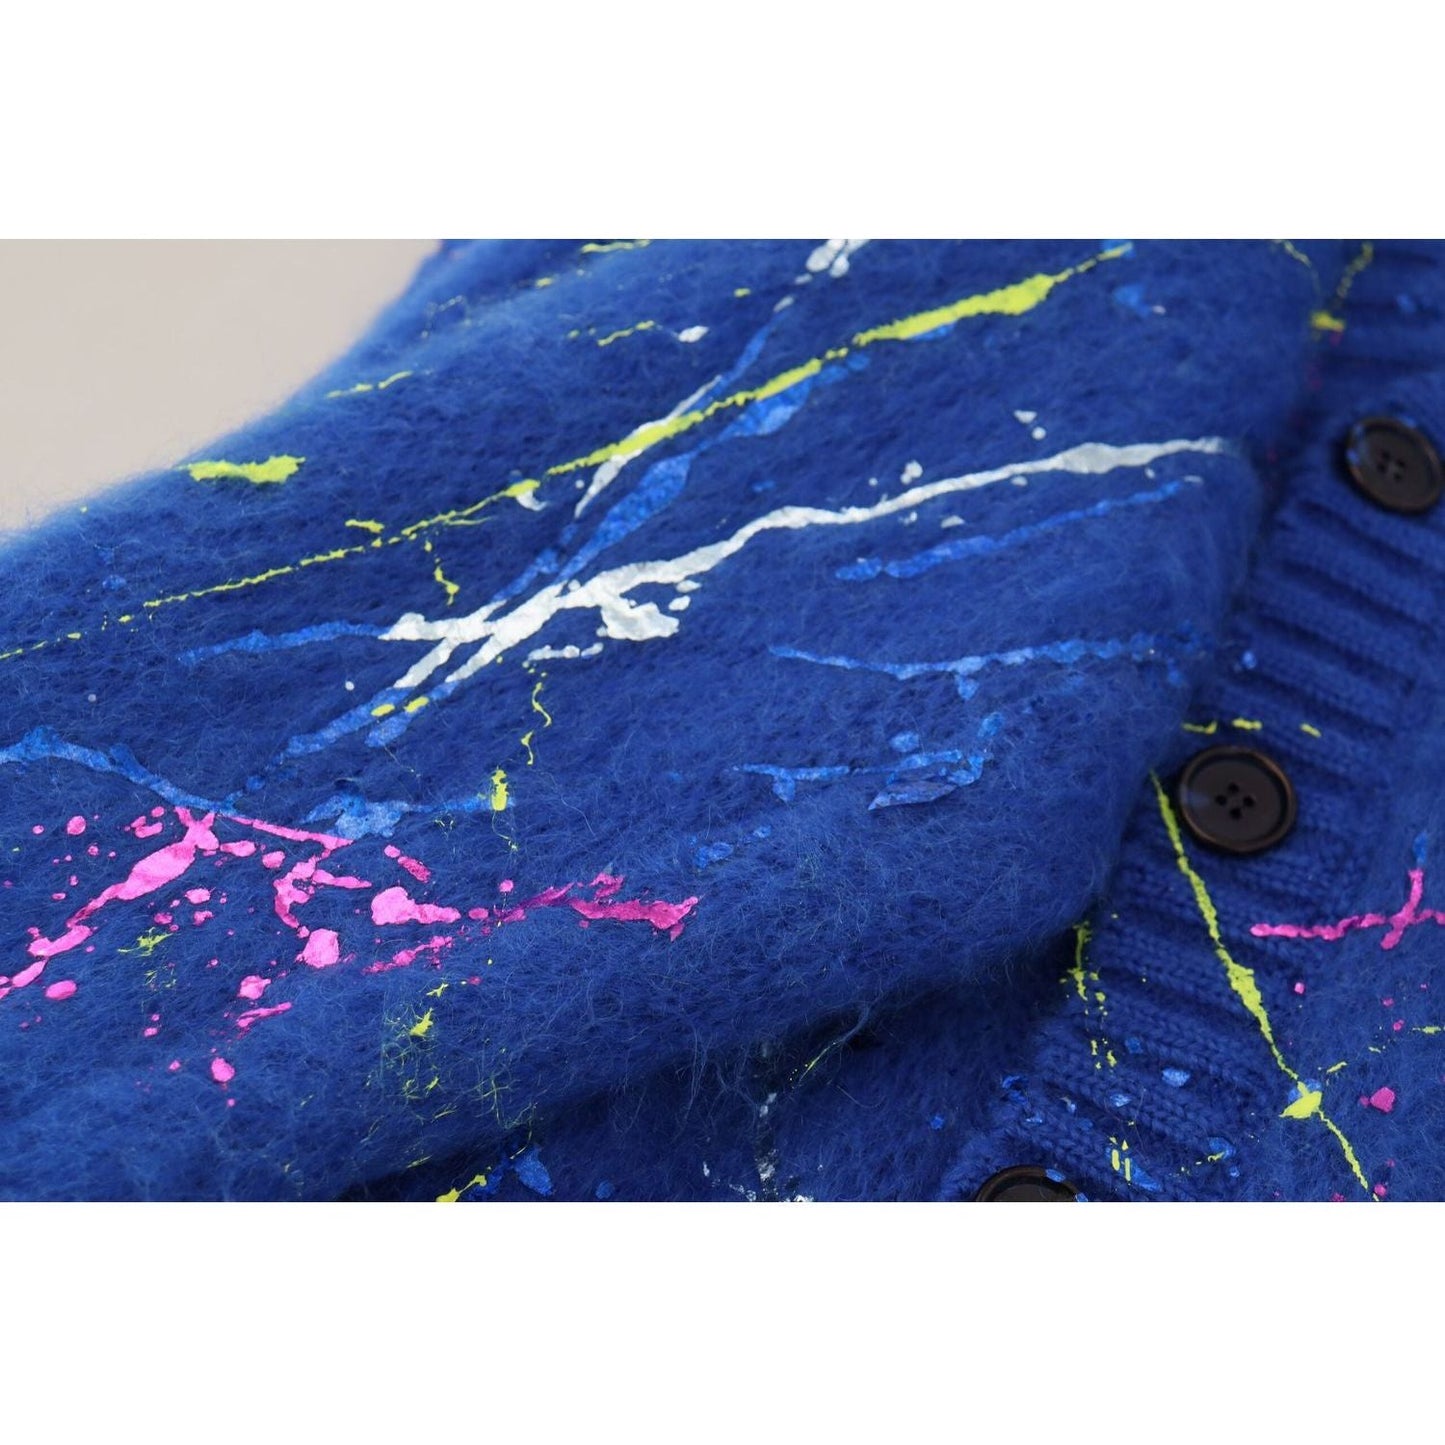 Dolce & Gabbana Elegant Multicolor Splash Mohair Cardigan blue-color-splash-mohair-cardigan-sweater